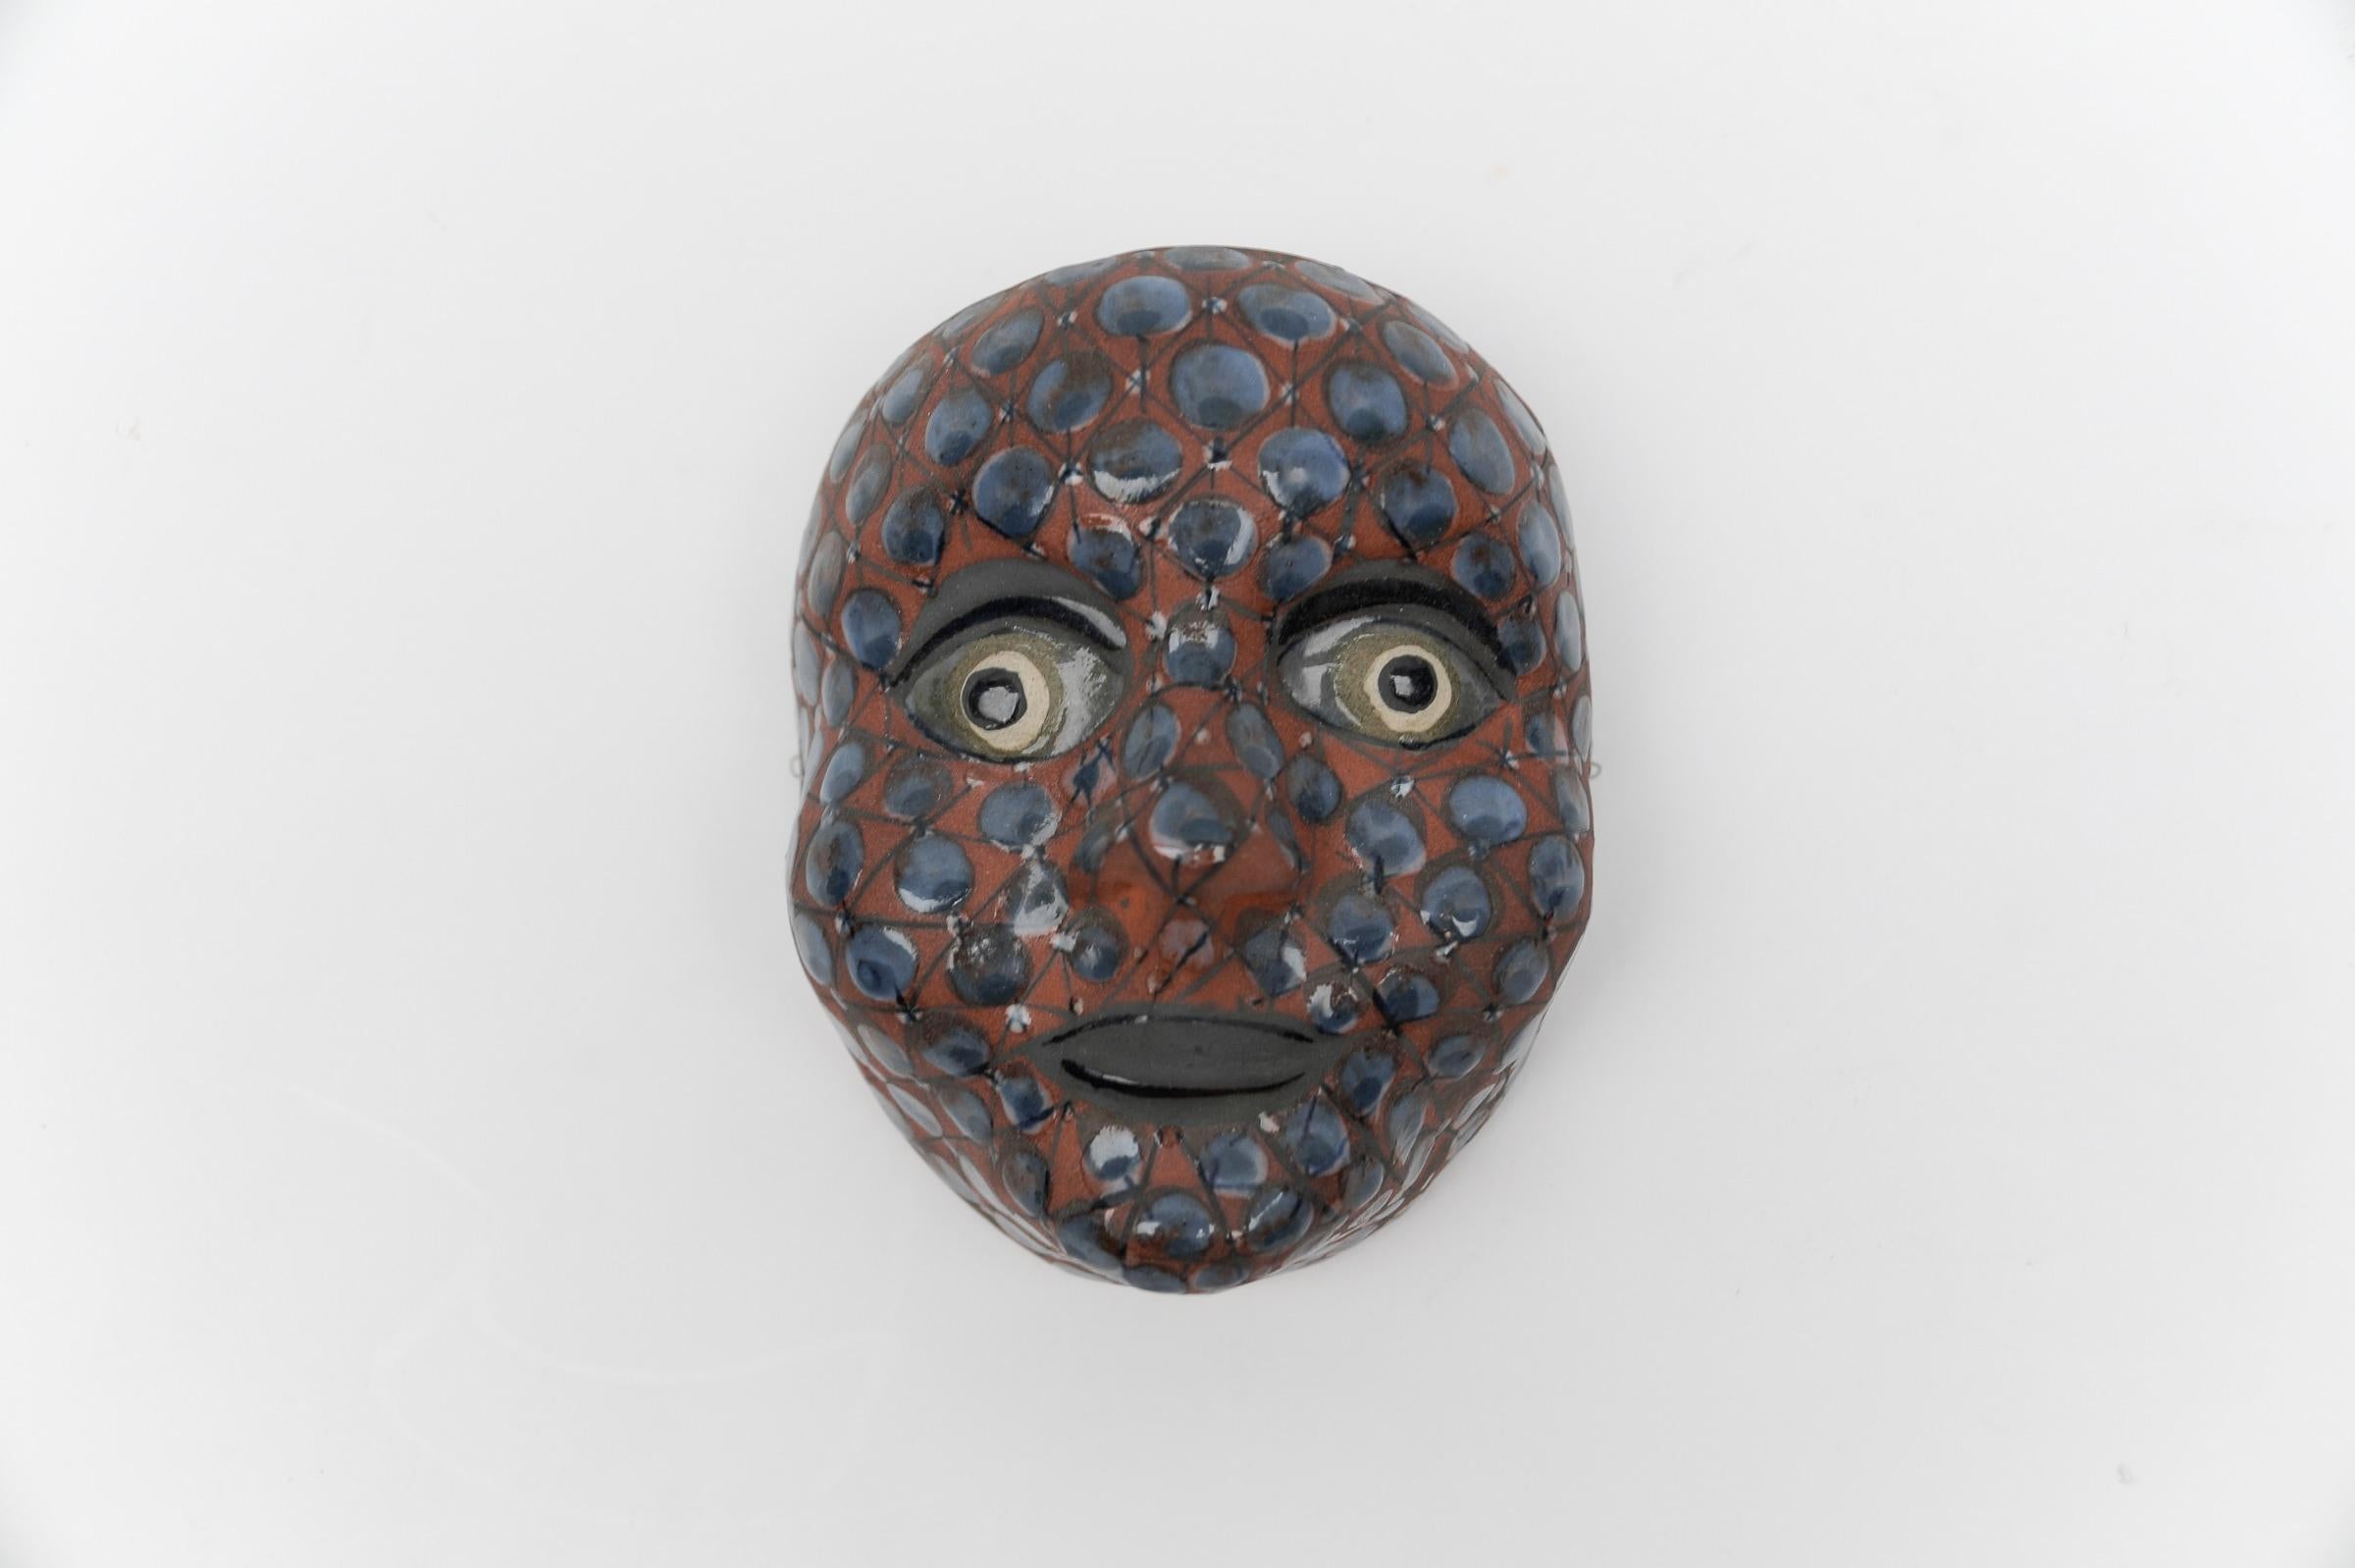 Mid-Century Modern Handmade Wall Ceramic Mask by DYBDAHL, 1960s Denmark For Sale 2